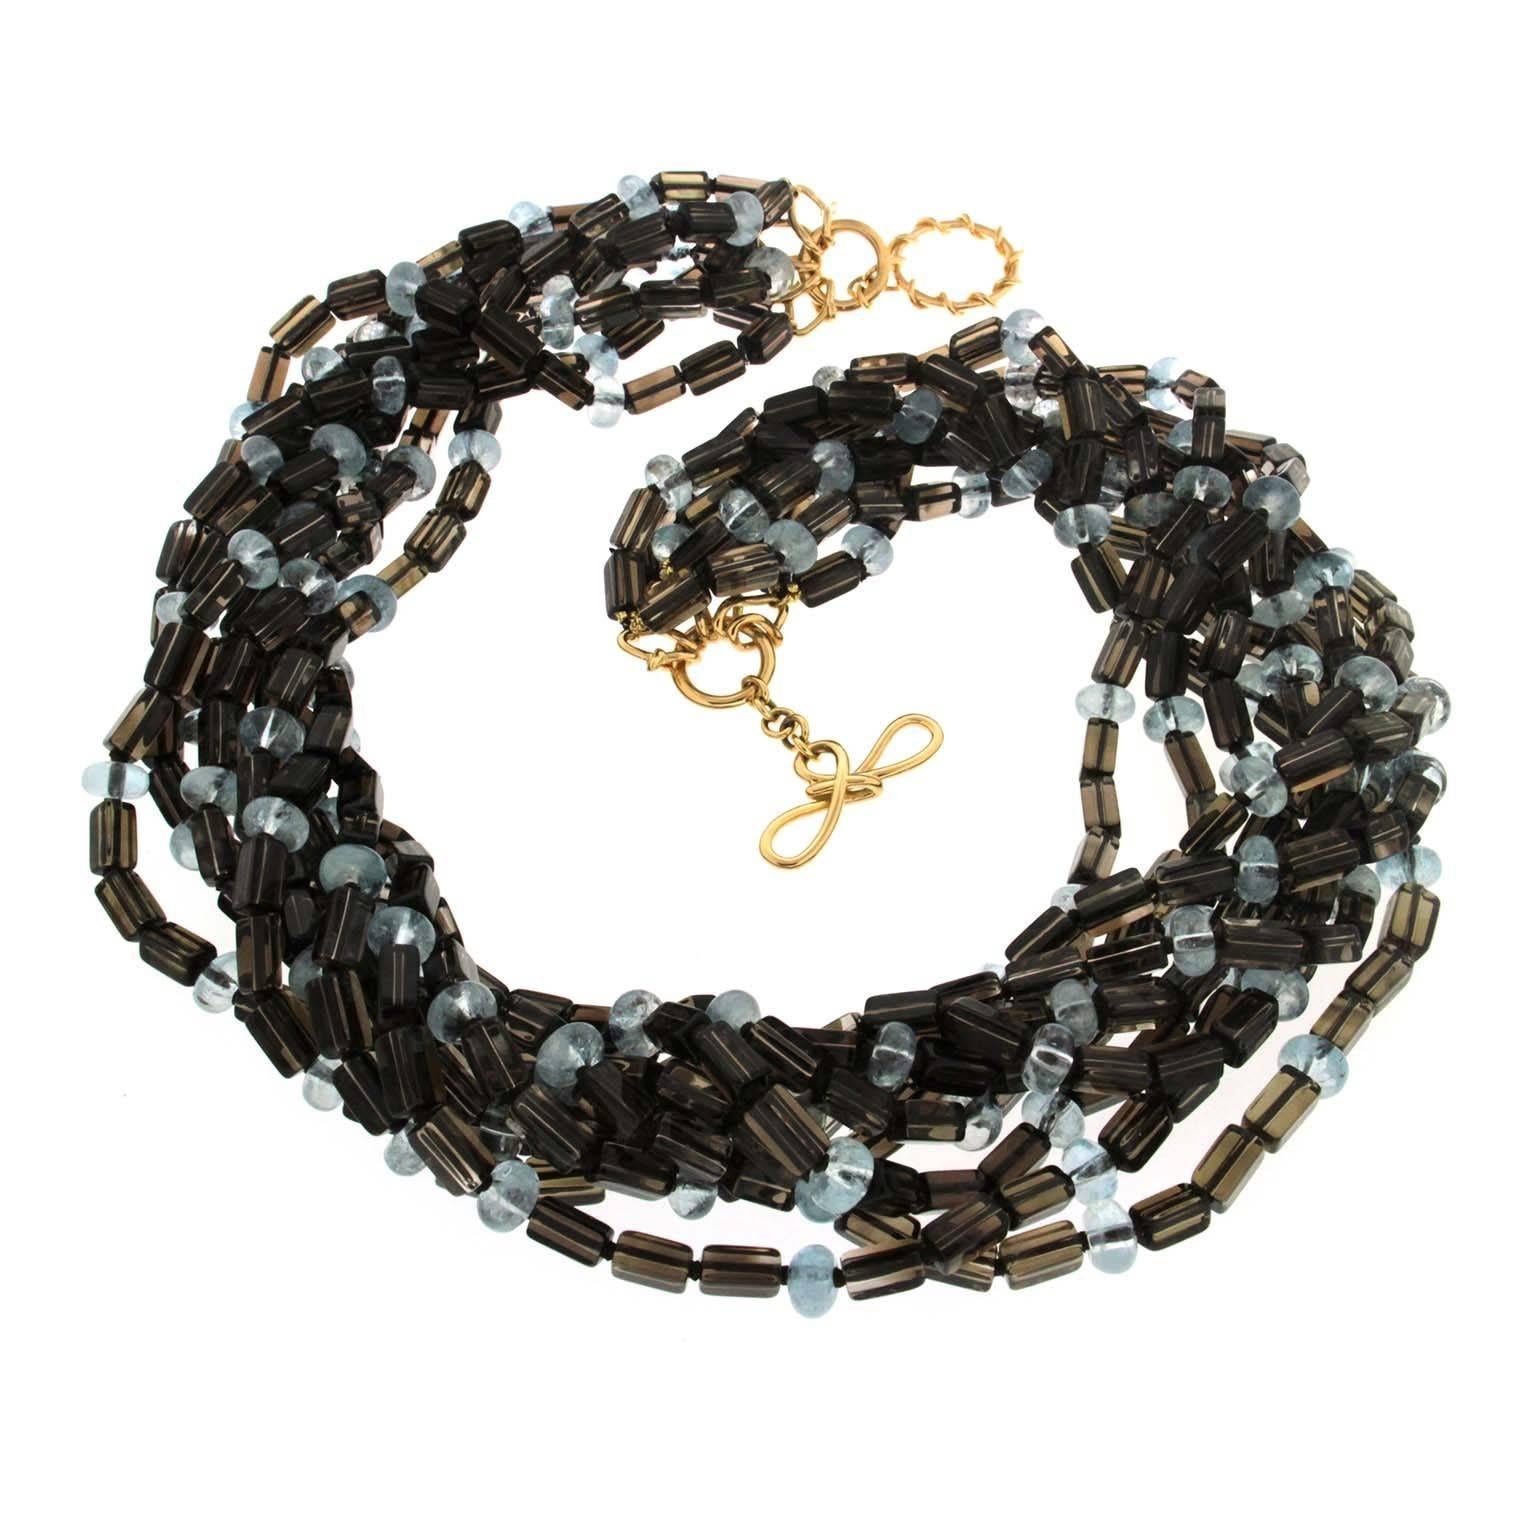 Smokey Quartz and Aquamarine multi strand necklace